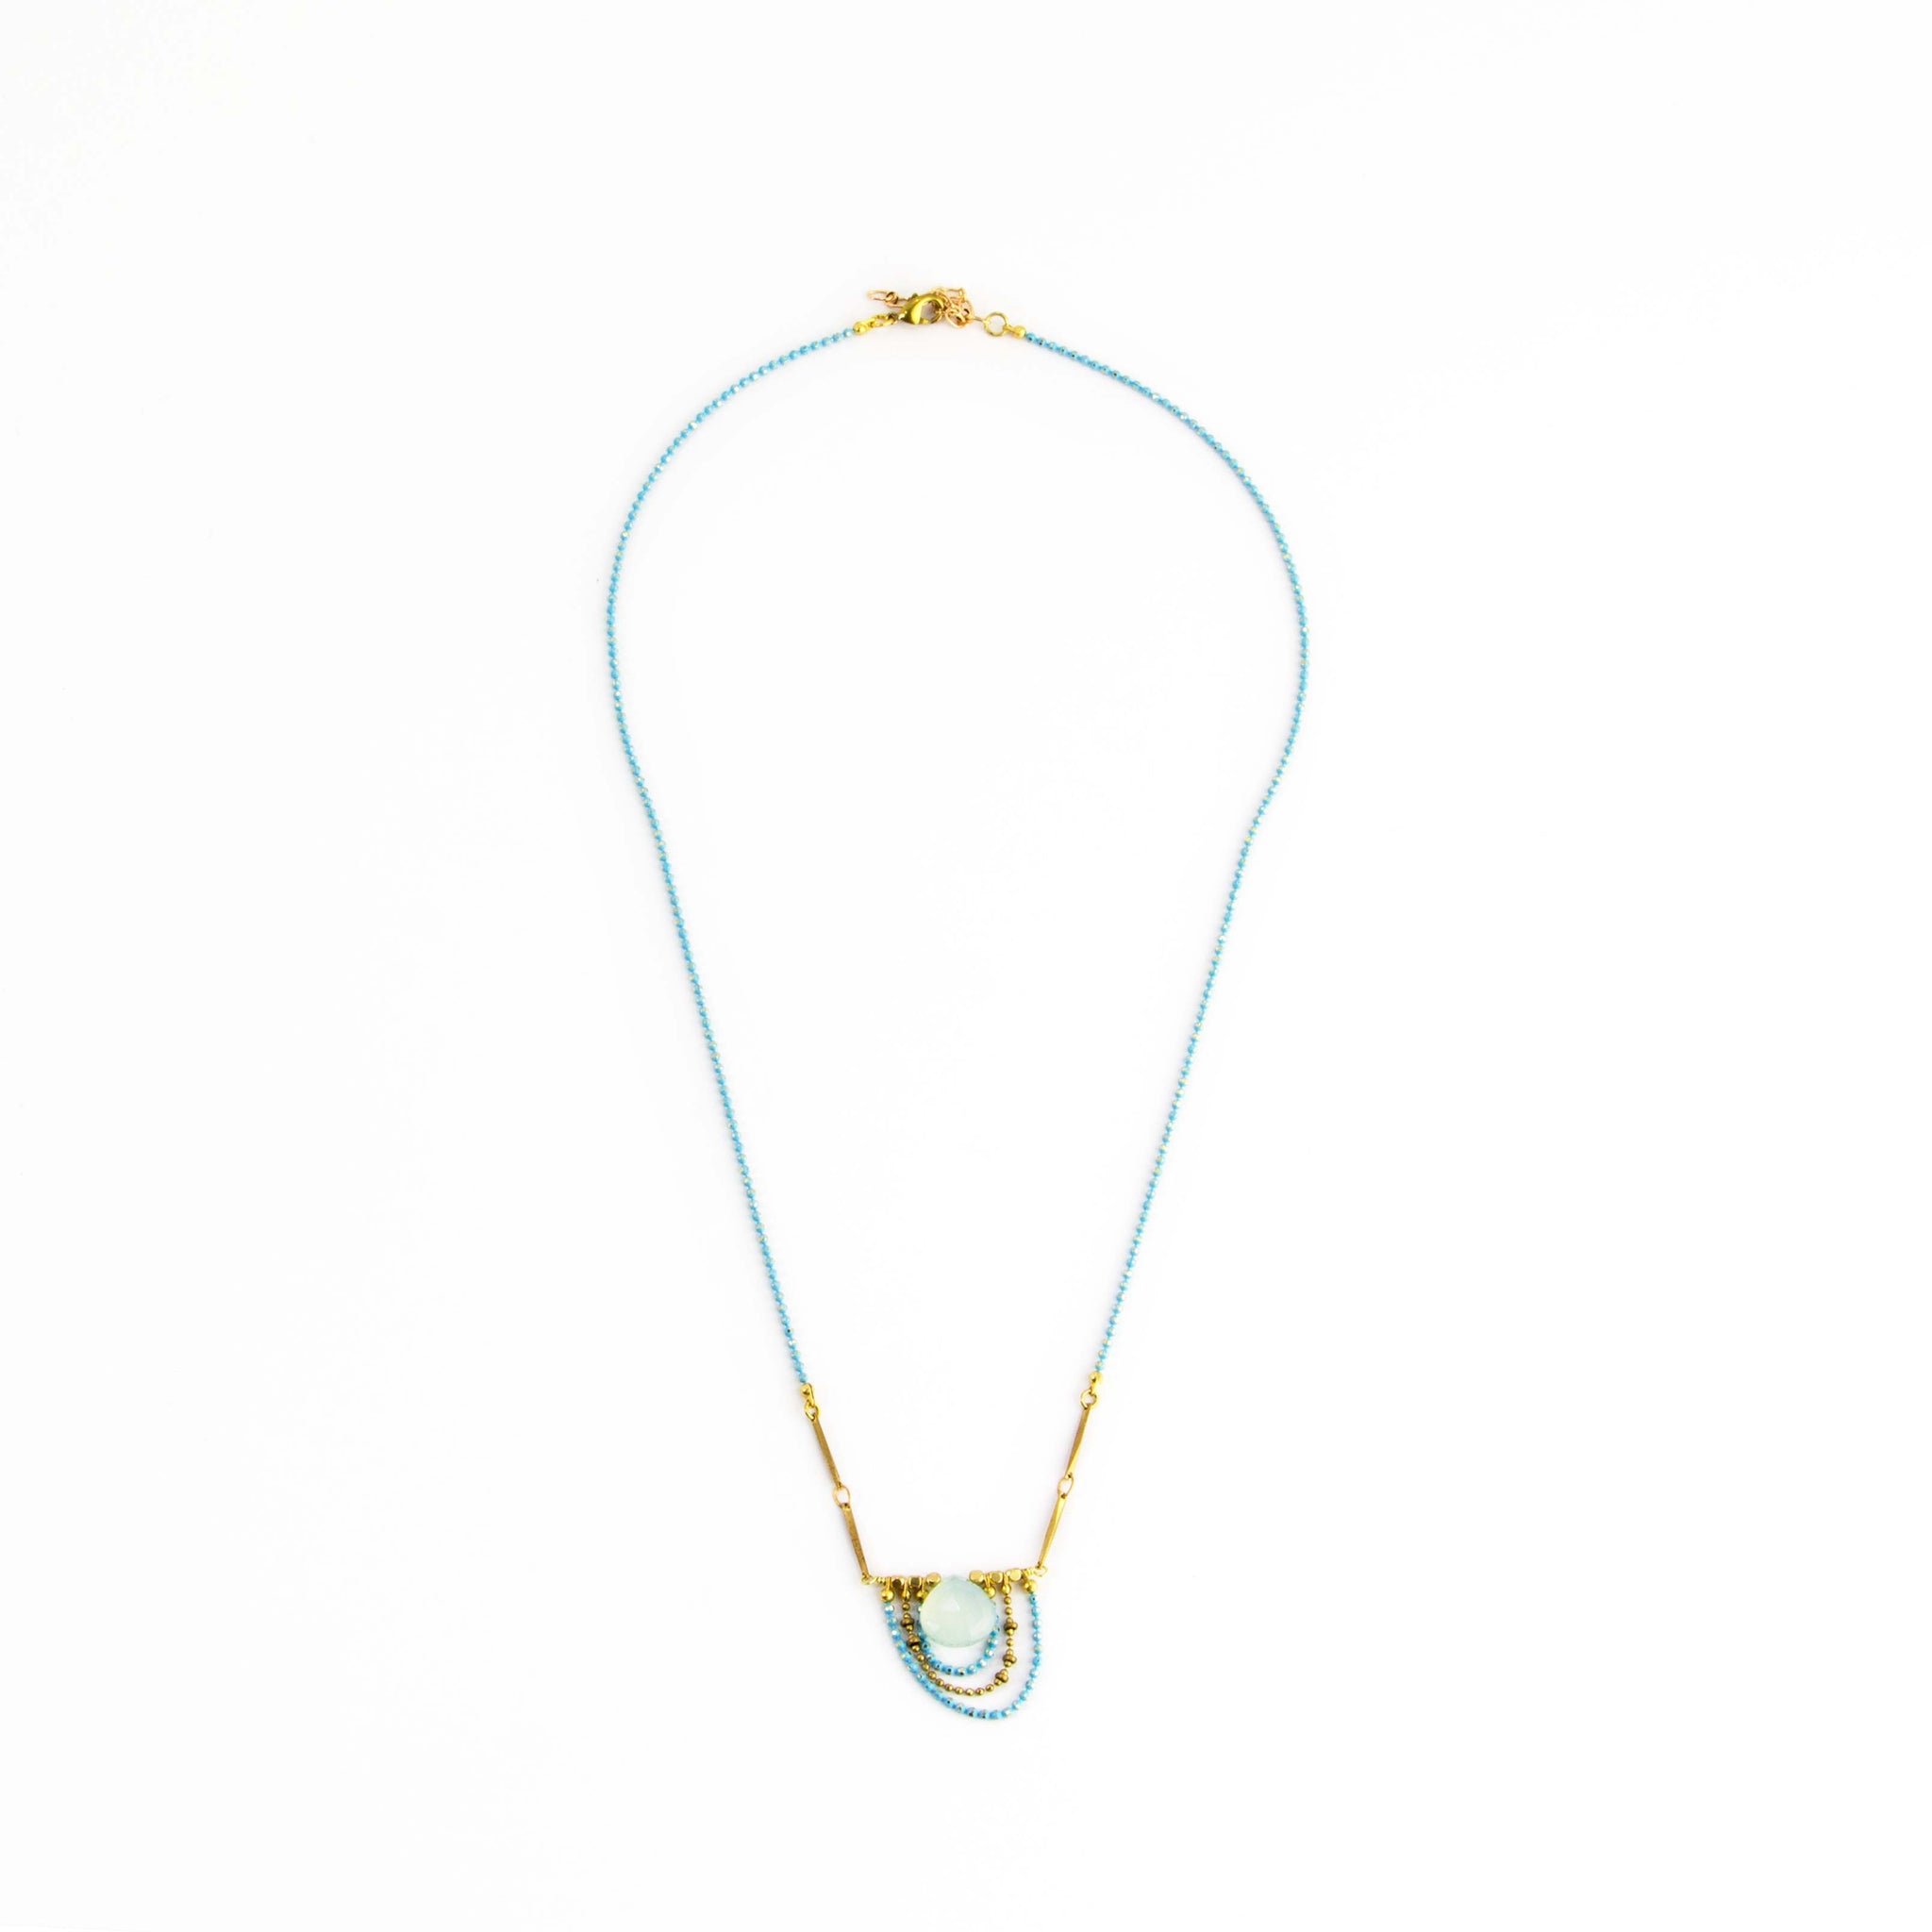 Aqua Chalcedony Drape Necklace